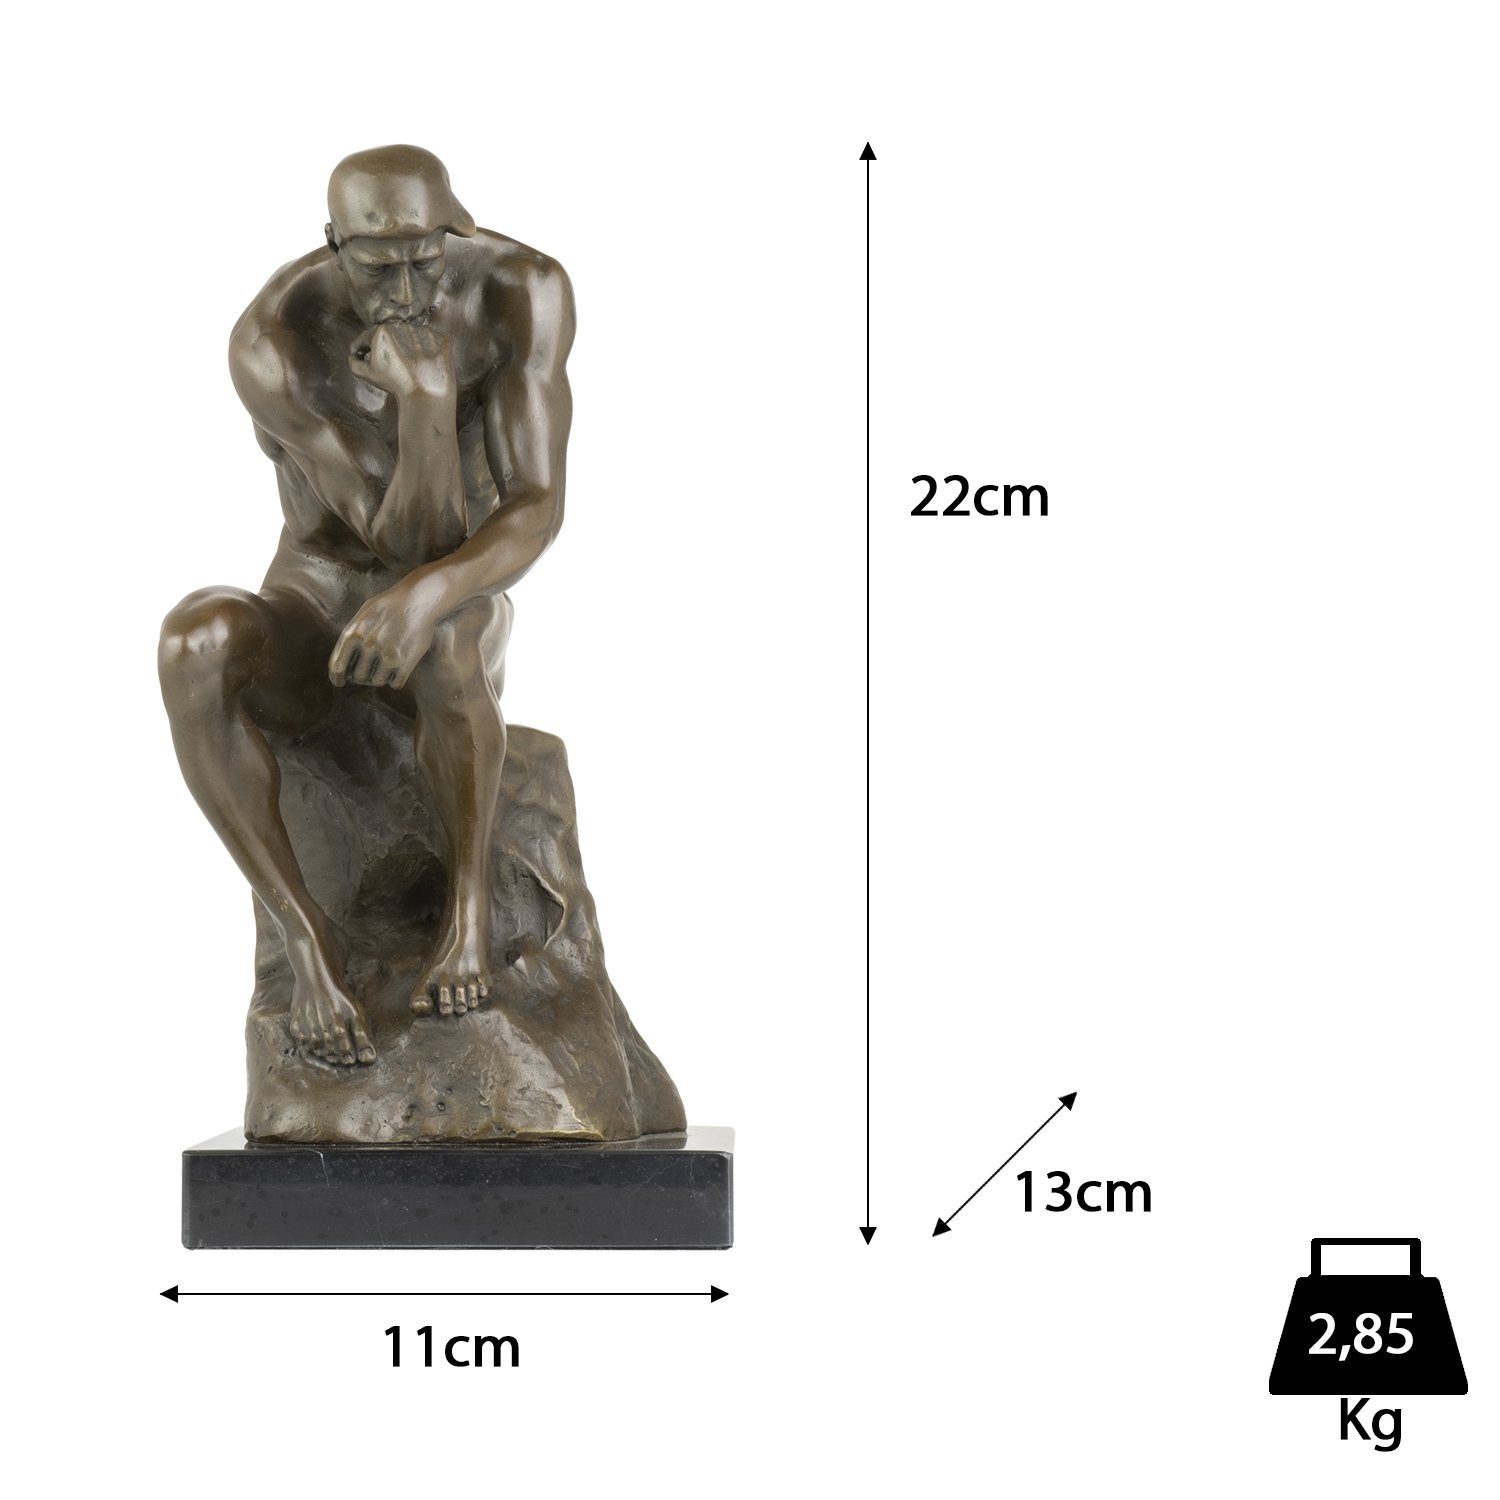 Moritz Skulptur Bronzefigur nach Antik-Stil Statue Skulpturen Figuren Denker Rodin